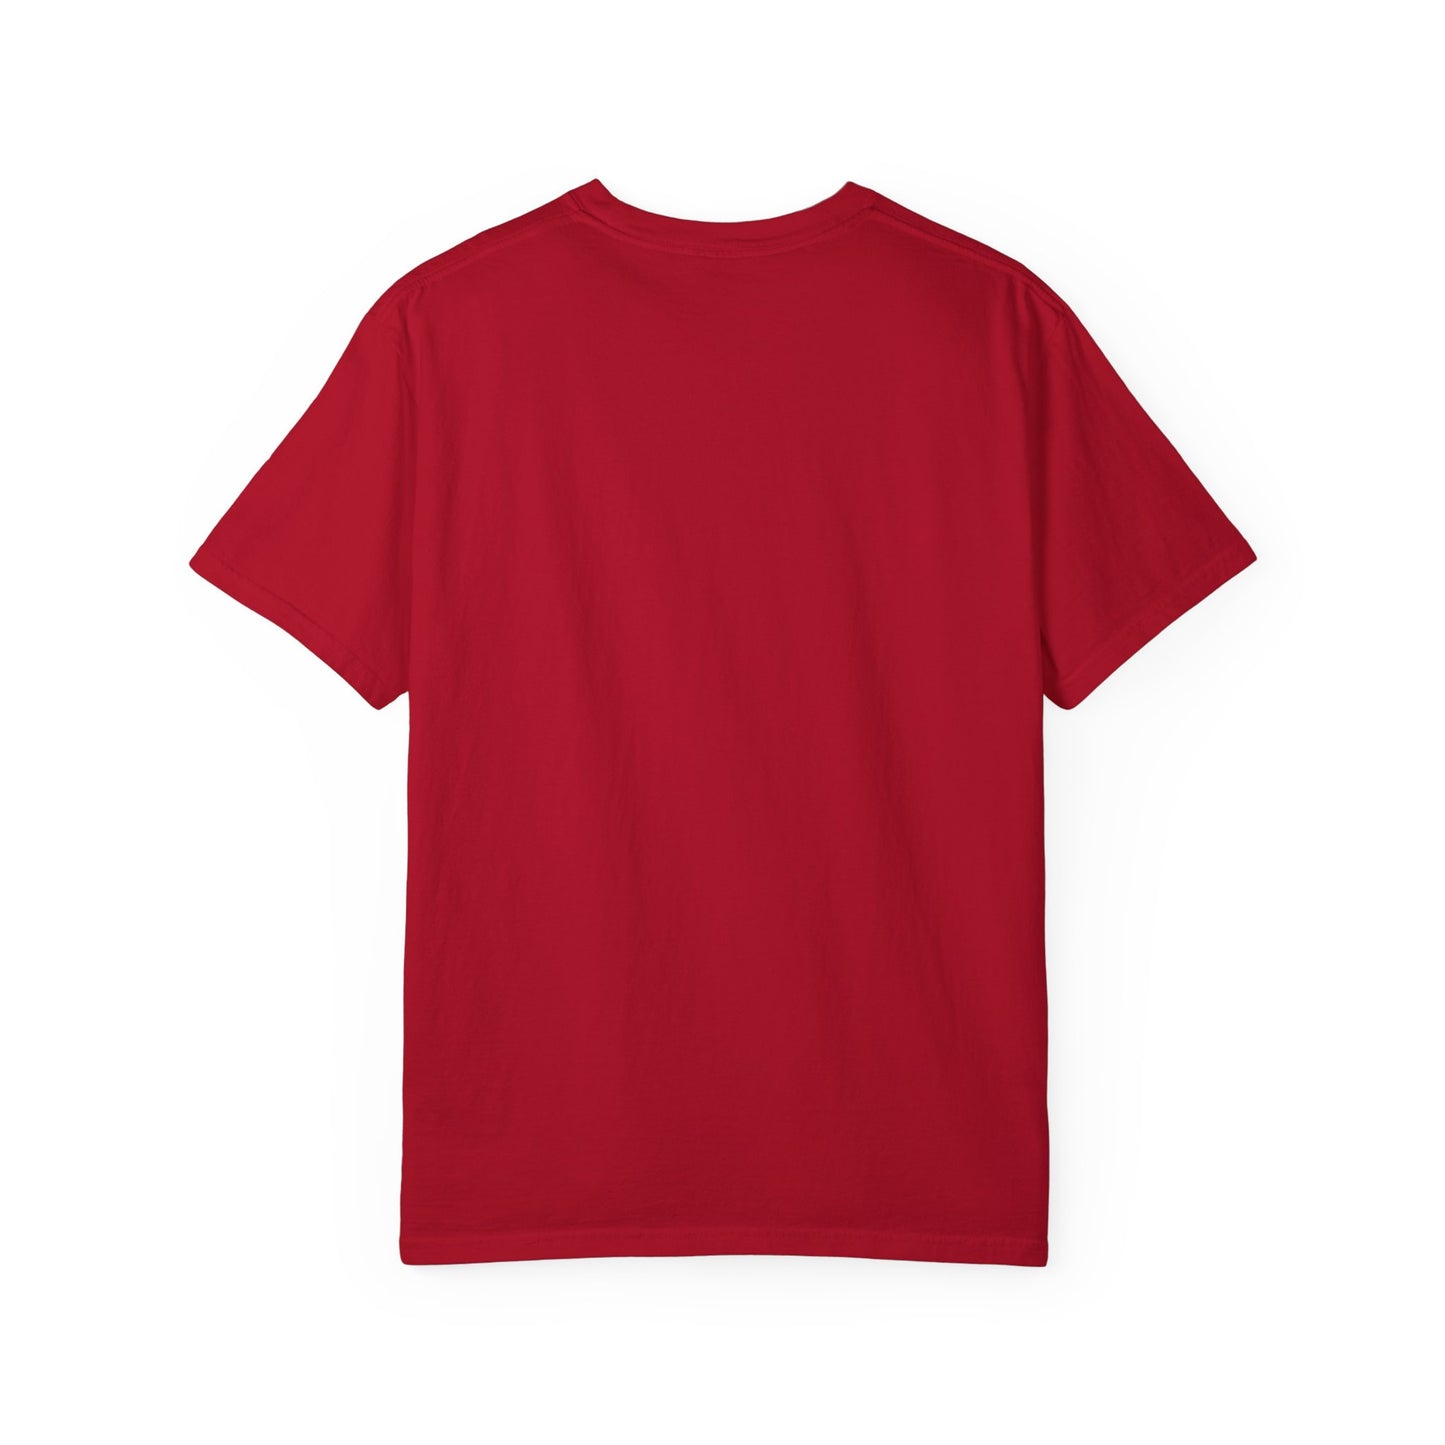 Lion Head Cool Graphic Design Novelty Unisex Garment-dyed T-shirt Cotton Funny Humorous Graphic Soft Premium Unisex Men Women Red T-shirt Birthday Gift-19